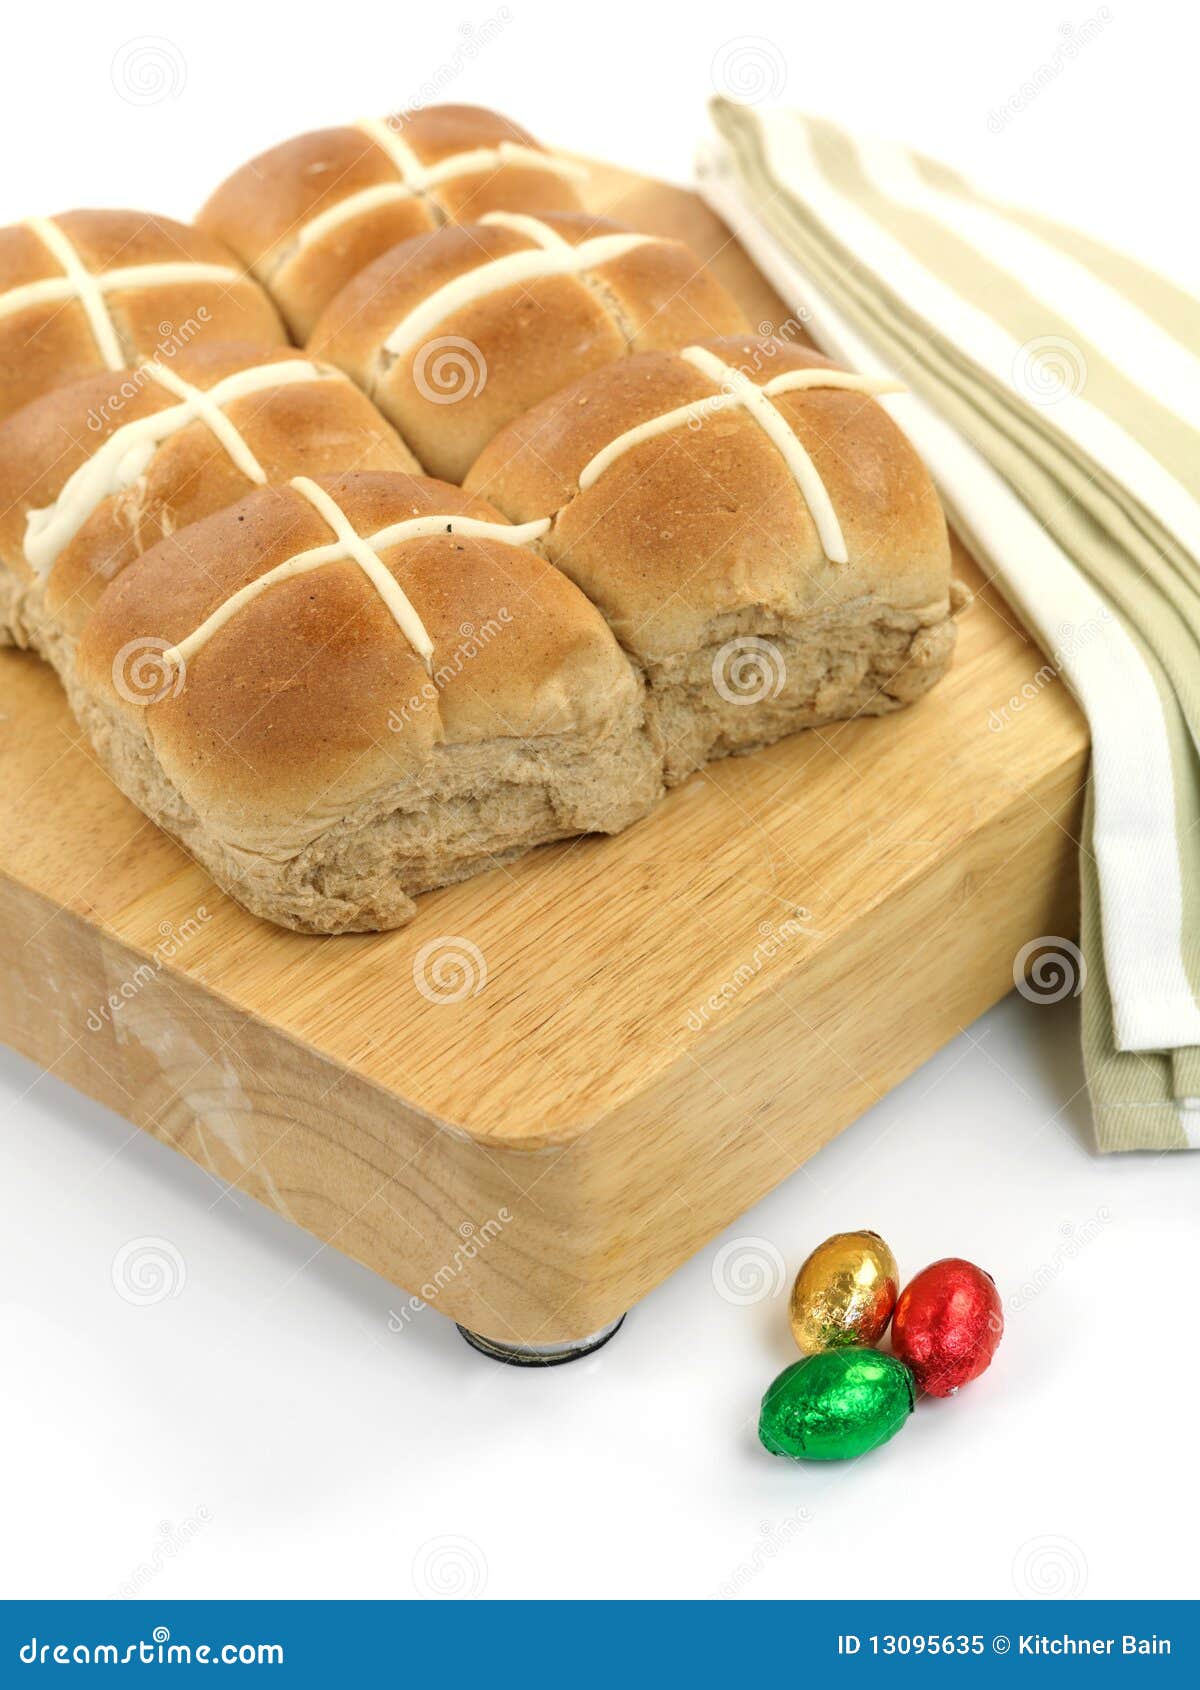 free clipart hot cross buns - photo #24